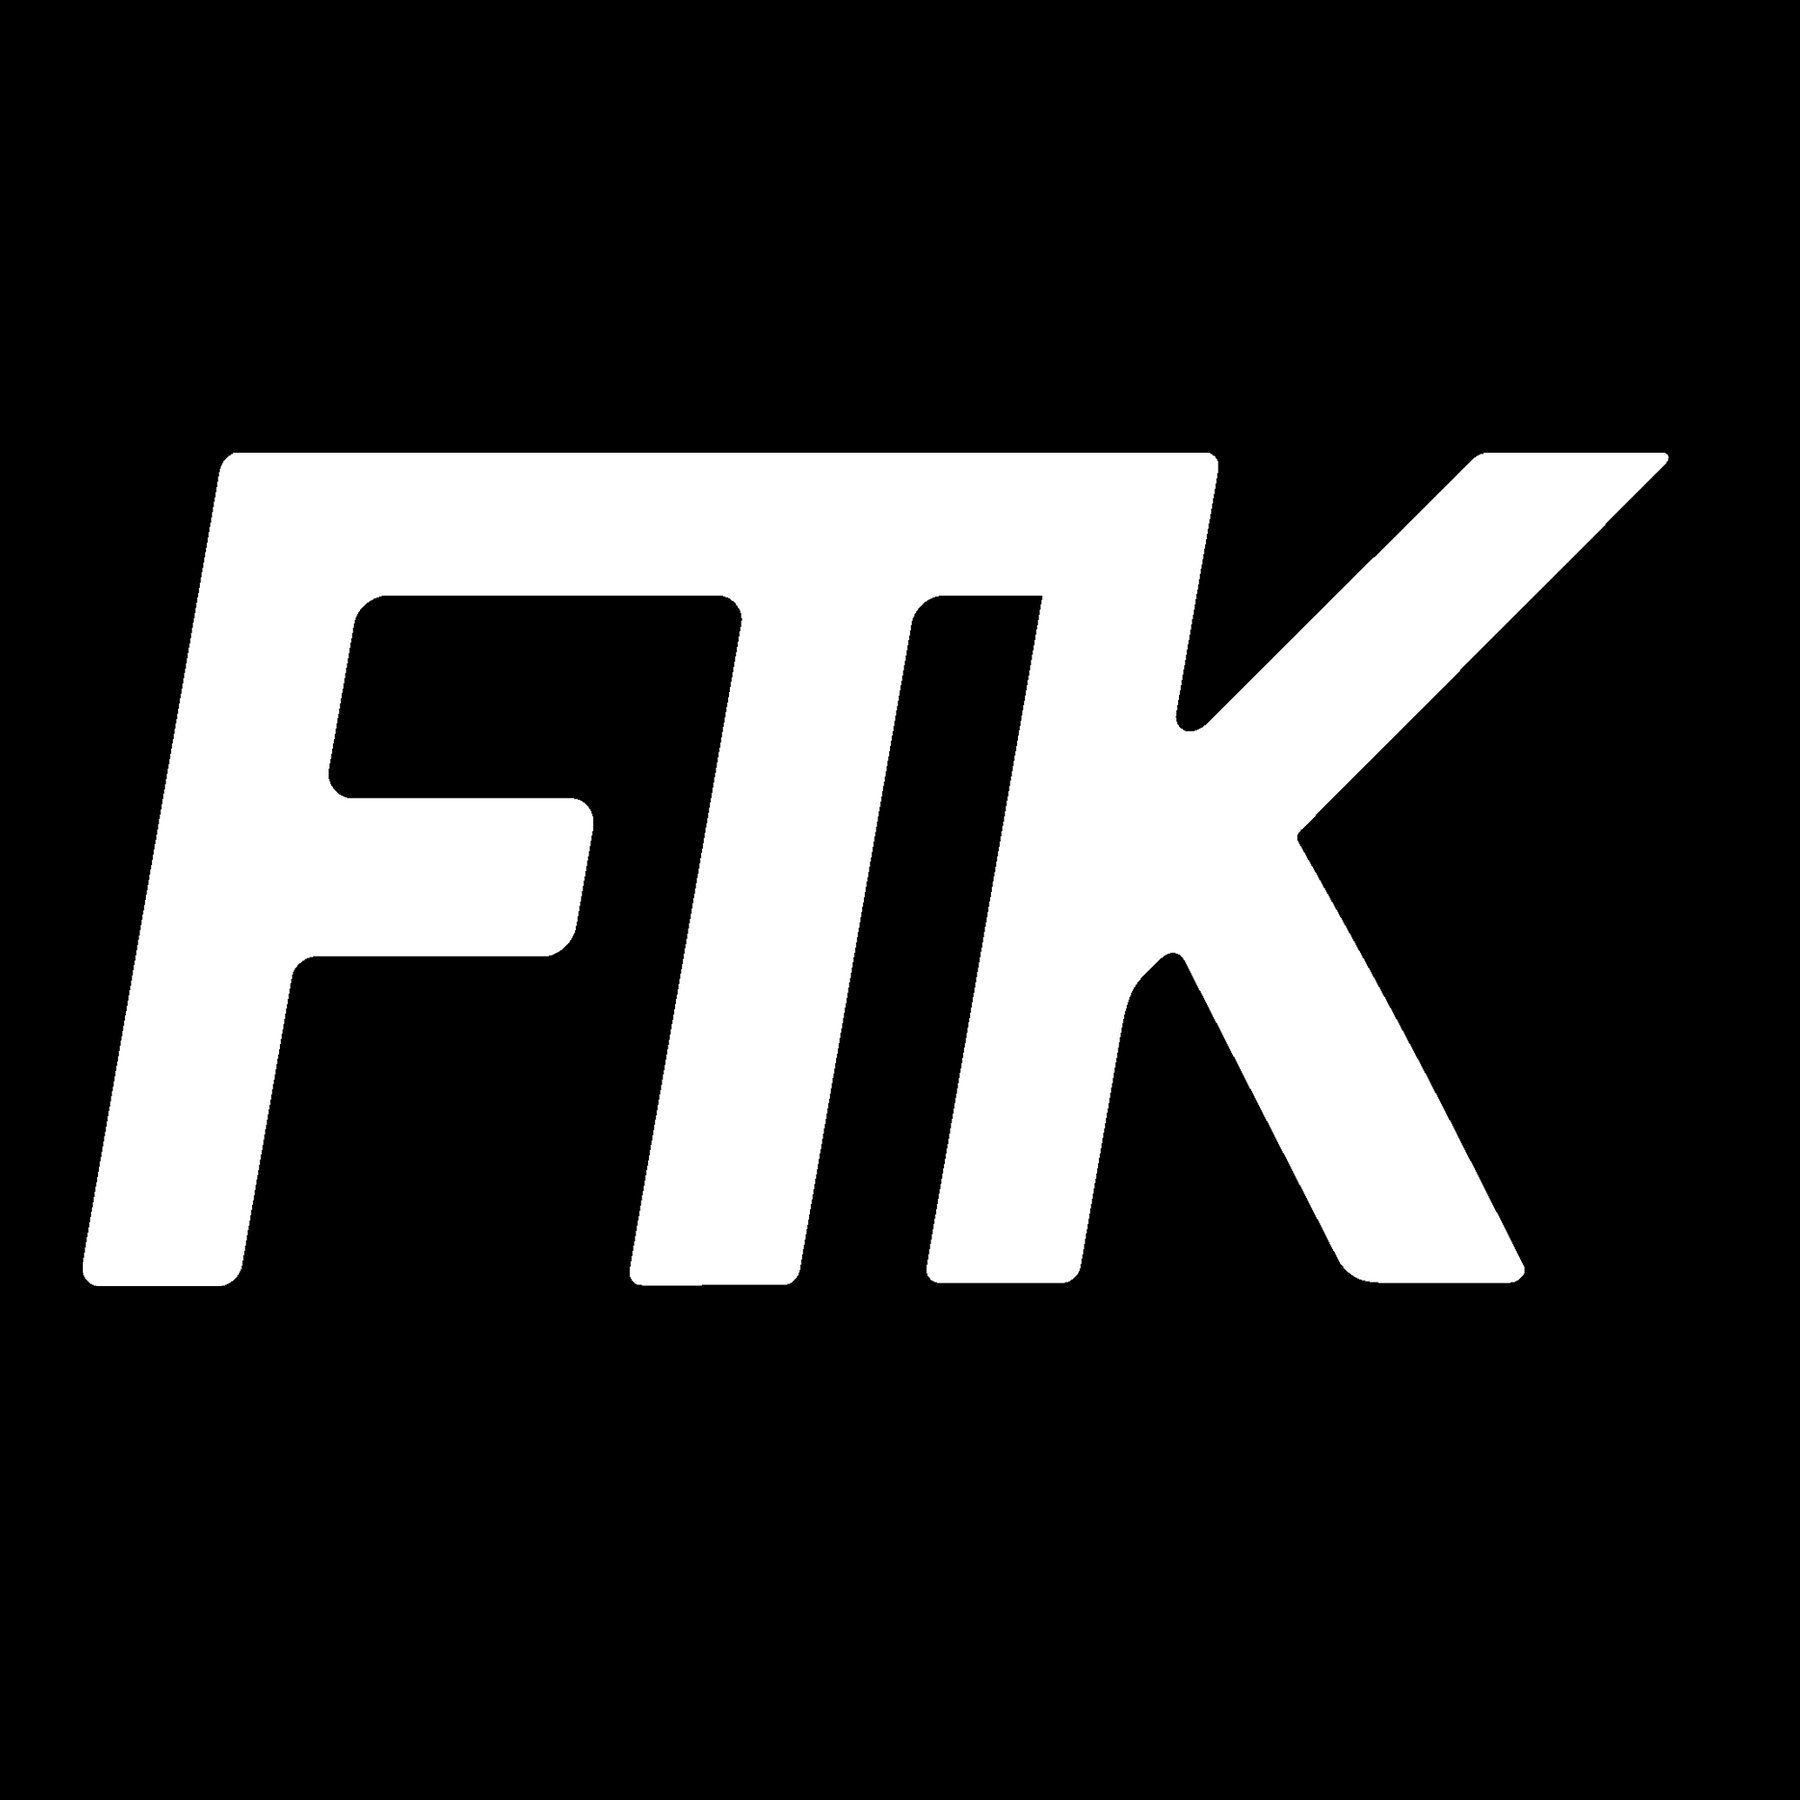 FTK Logo - FTK Pocket T-Shirt - Black